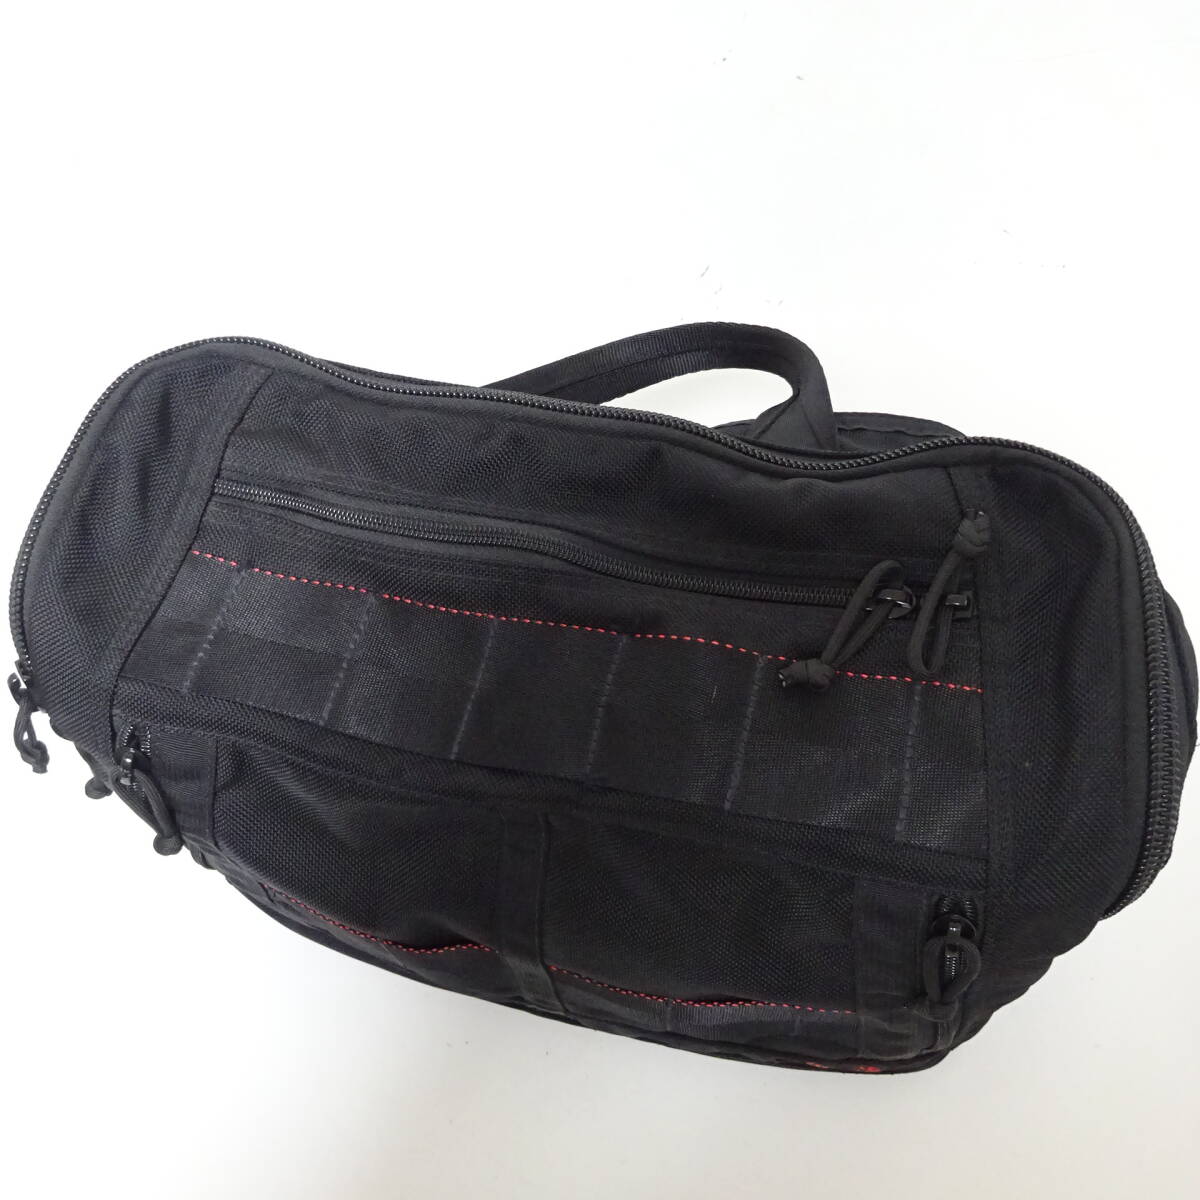 BRIEFING made in USA Briefing камера сумка сумка на плечо 100 размер отправка KK-2610891-232mrrz